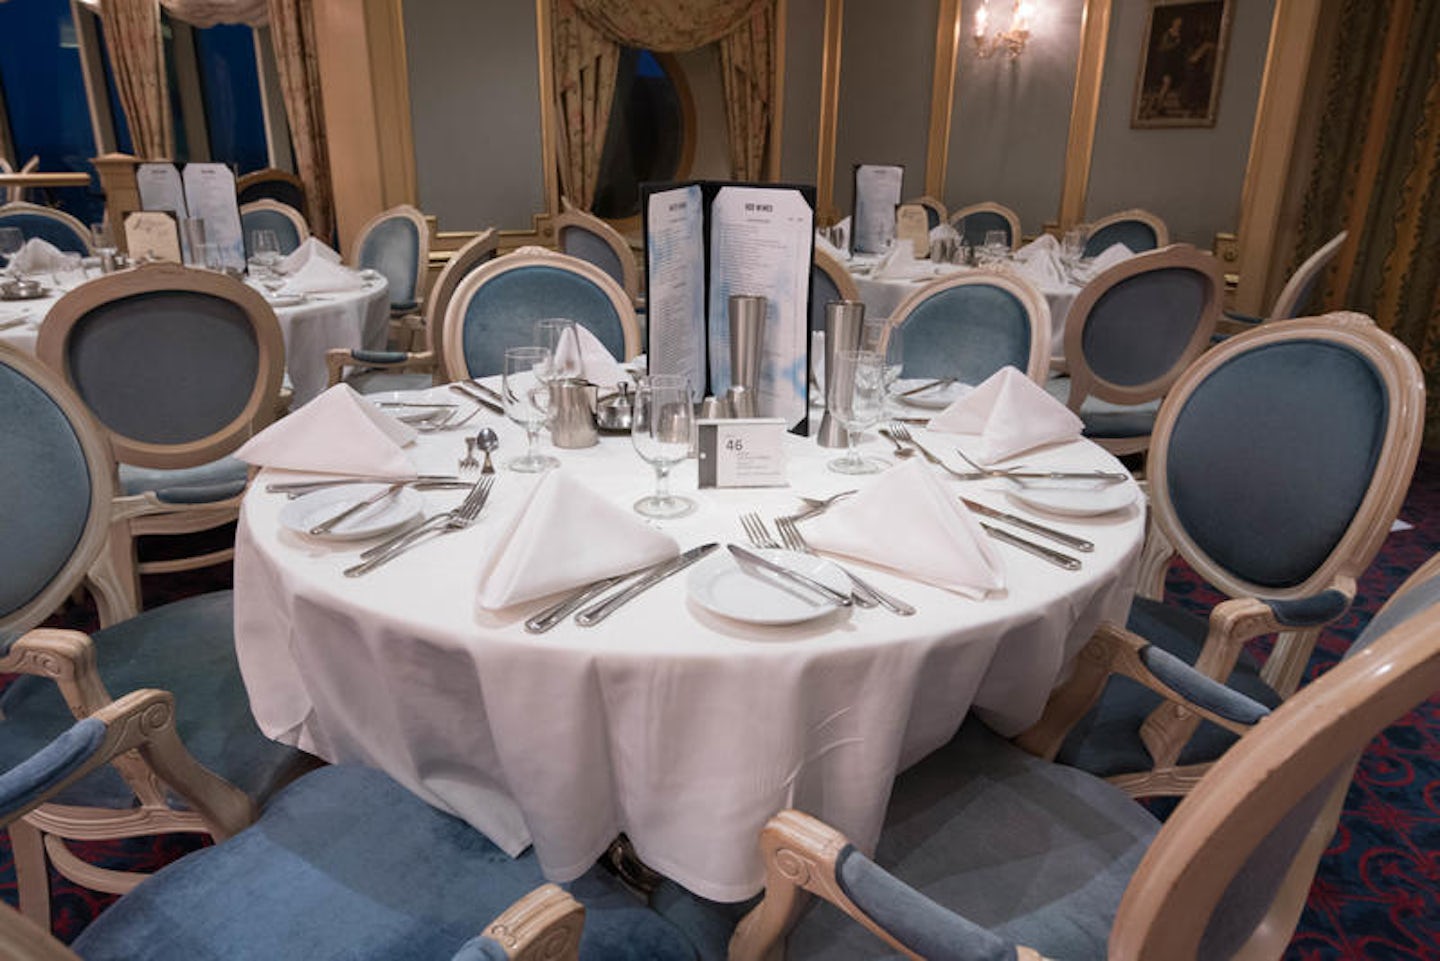 Galileo's Dining Room on Freedom of the Seas